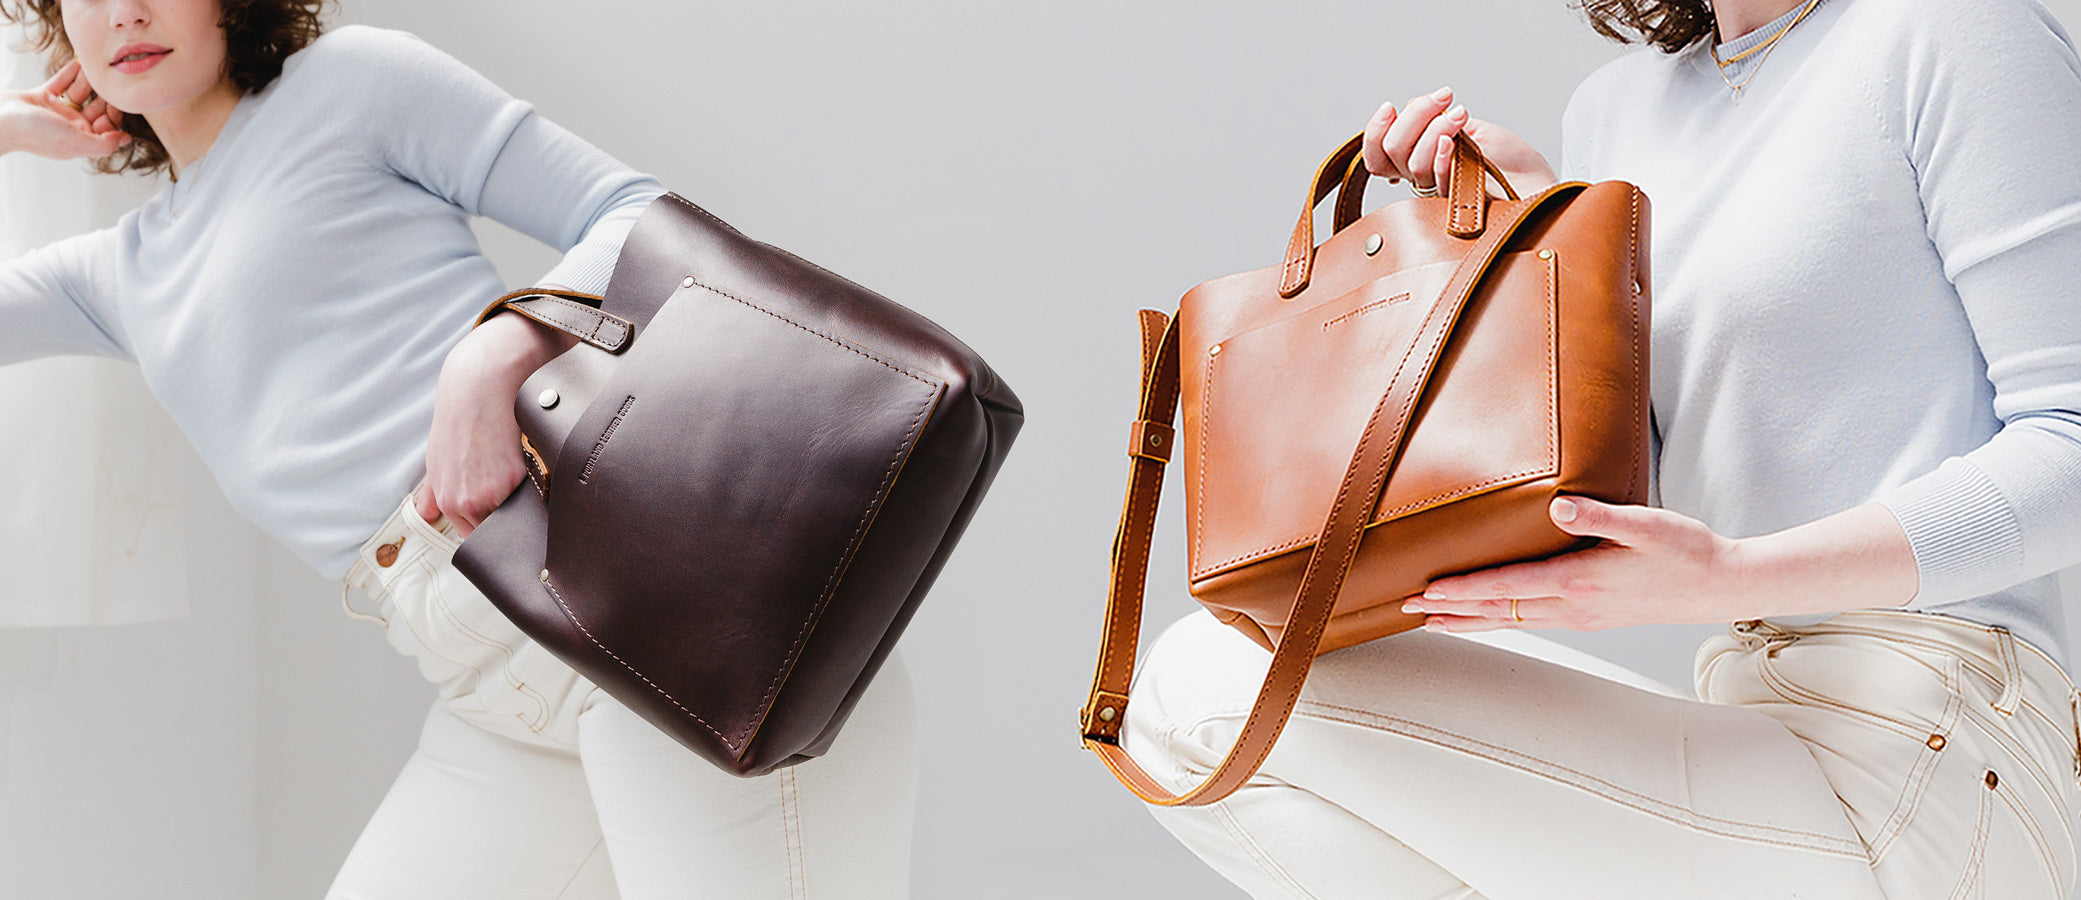 B MAKOWSKY LARGE buttery soft leather handbag shoulder bag slouchy $14.00 -  PicClick